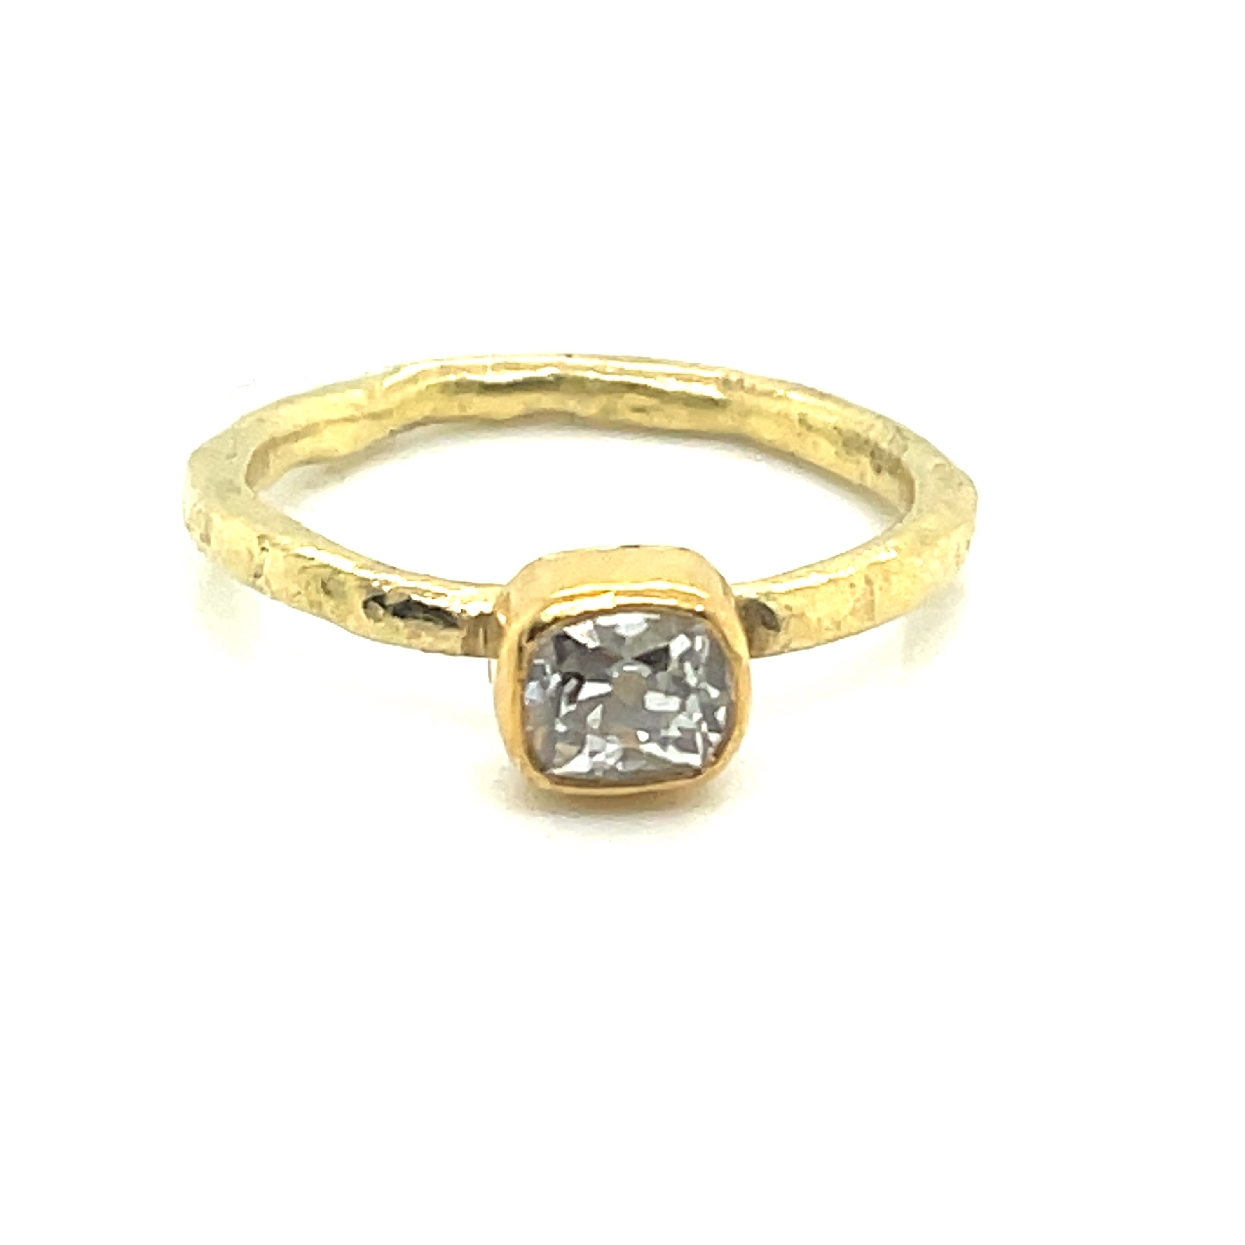 18K Yellow Gold Ring with Square Cut Bezel Set Diamond

Size 8